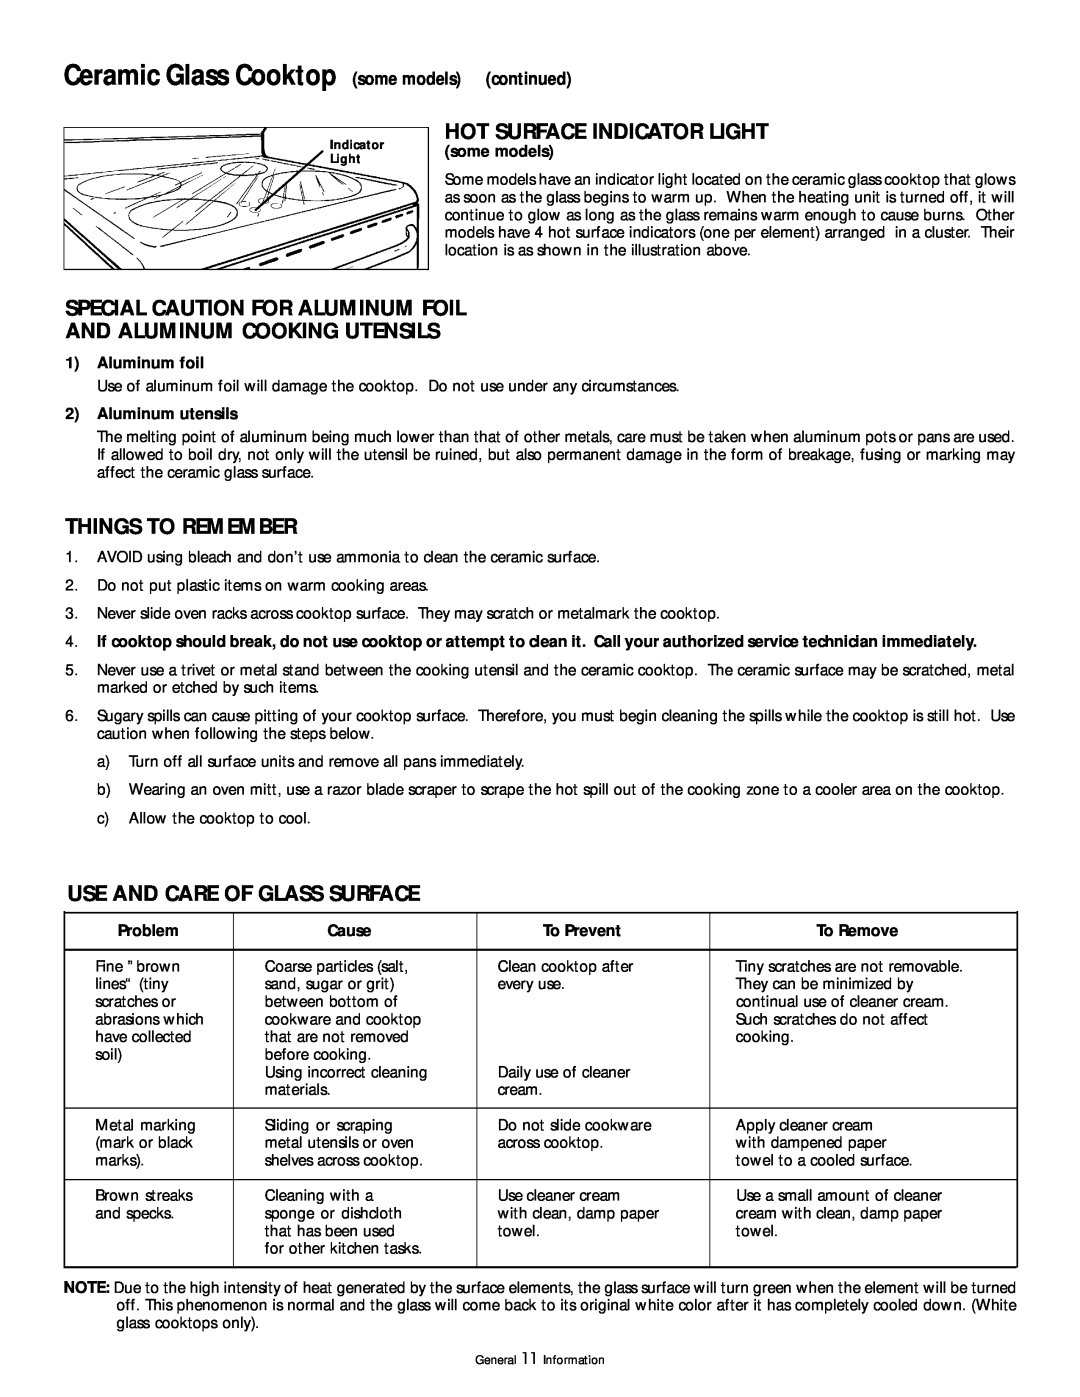 Frigidaire 318200404 Hot Surface Indicator Light, Special Caution For Aluminum Foil And Aluminum Cooking Utensils, Problem 